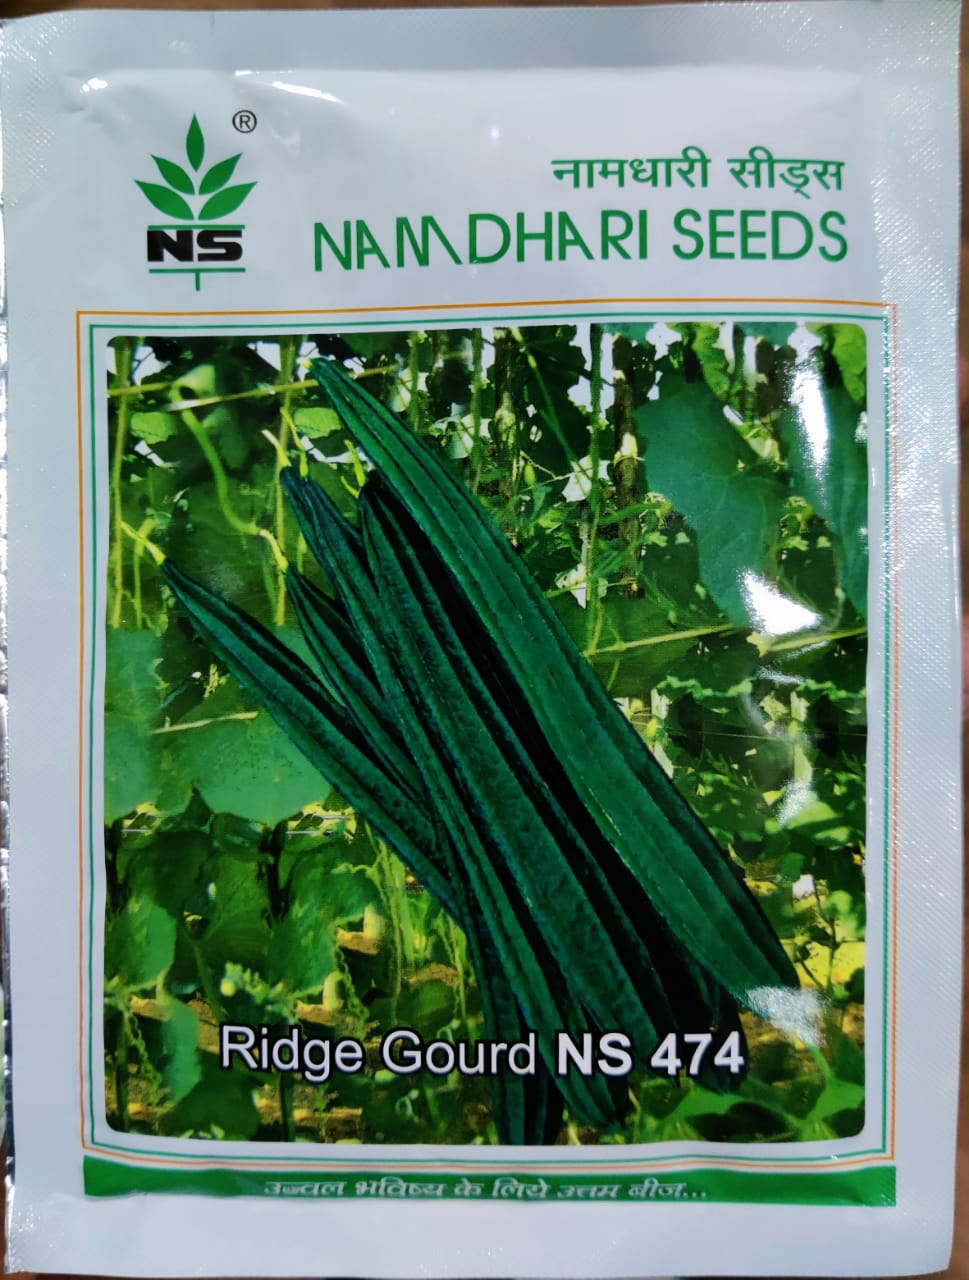 Ridge Gourd NS 474 (Namdhari Seeds)